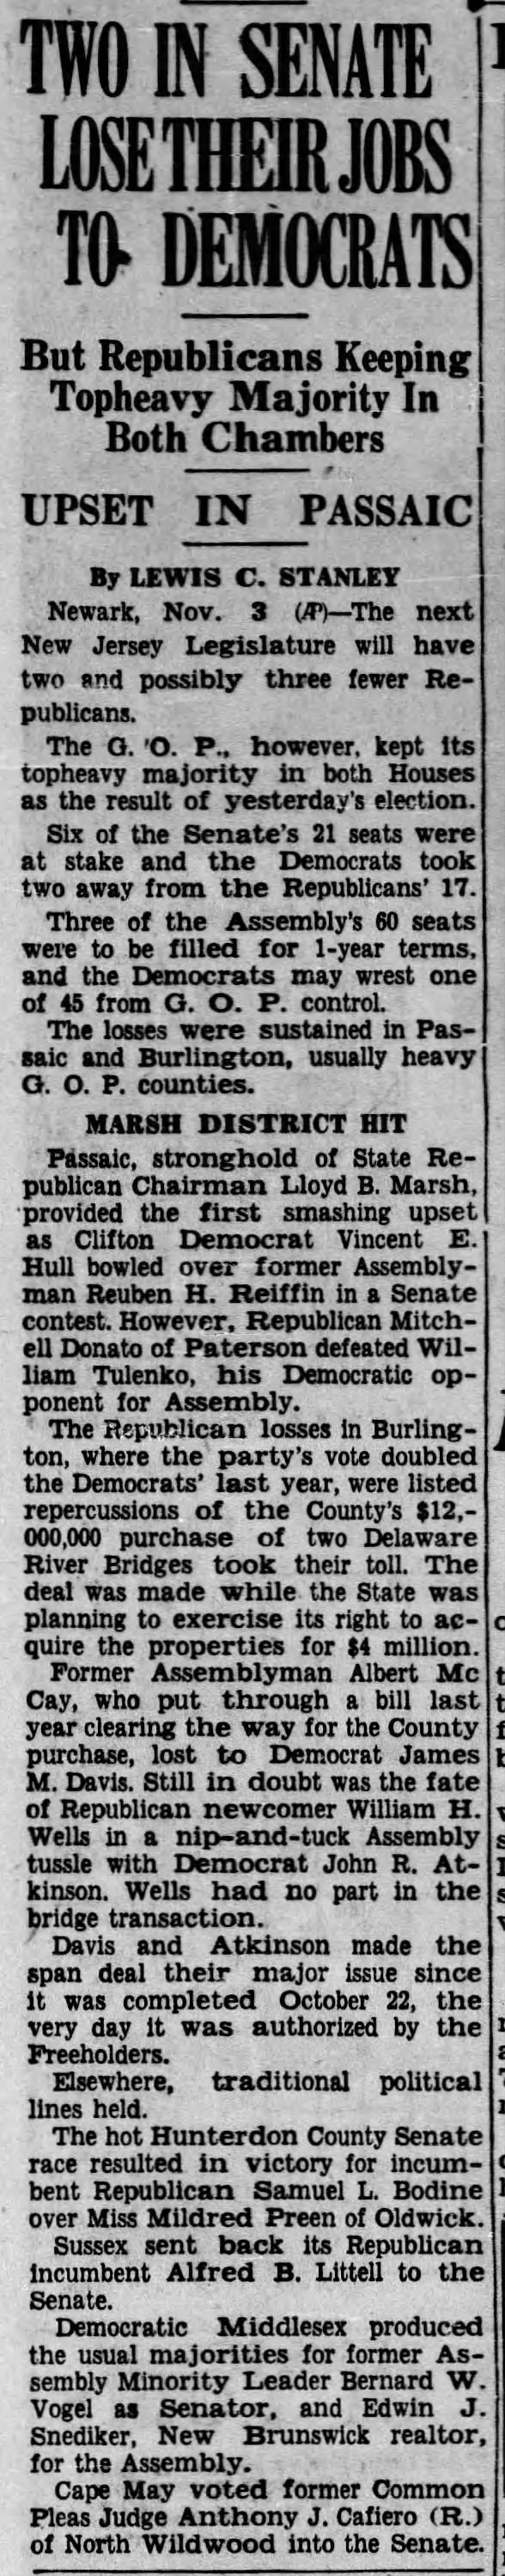 1948 New Jersey Senate Senate results